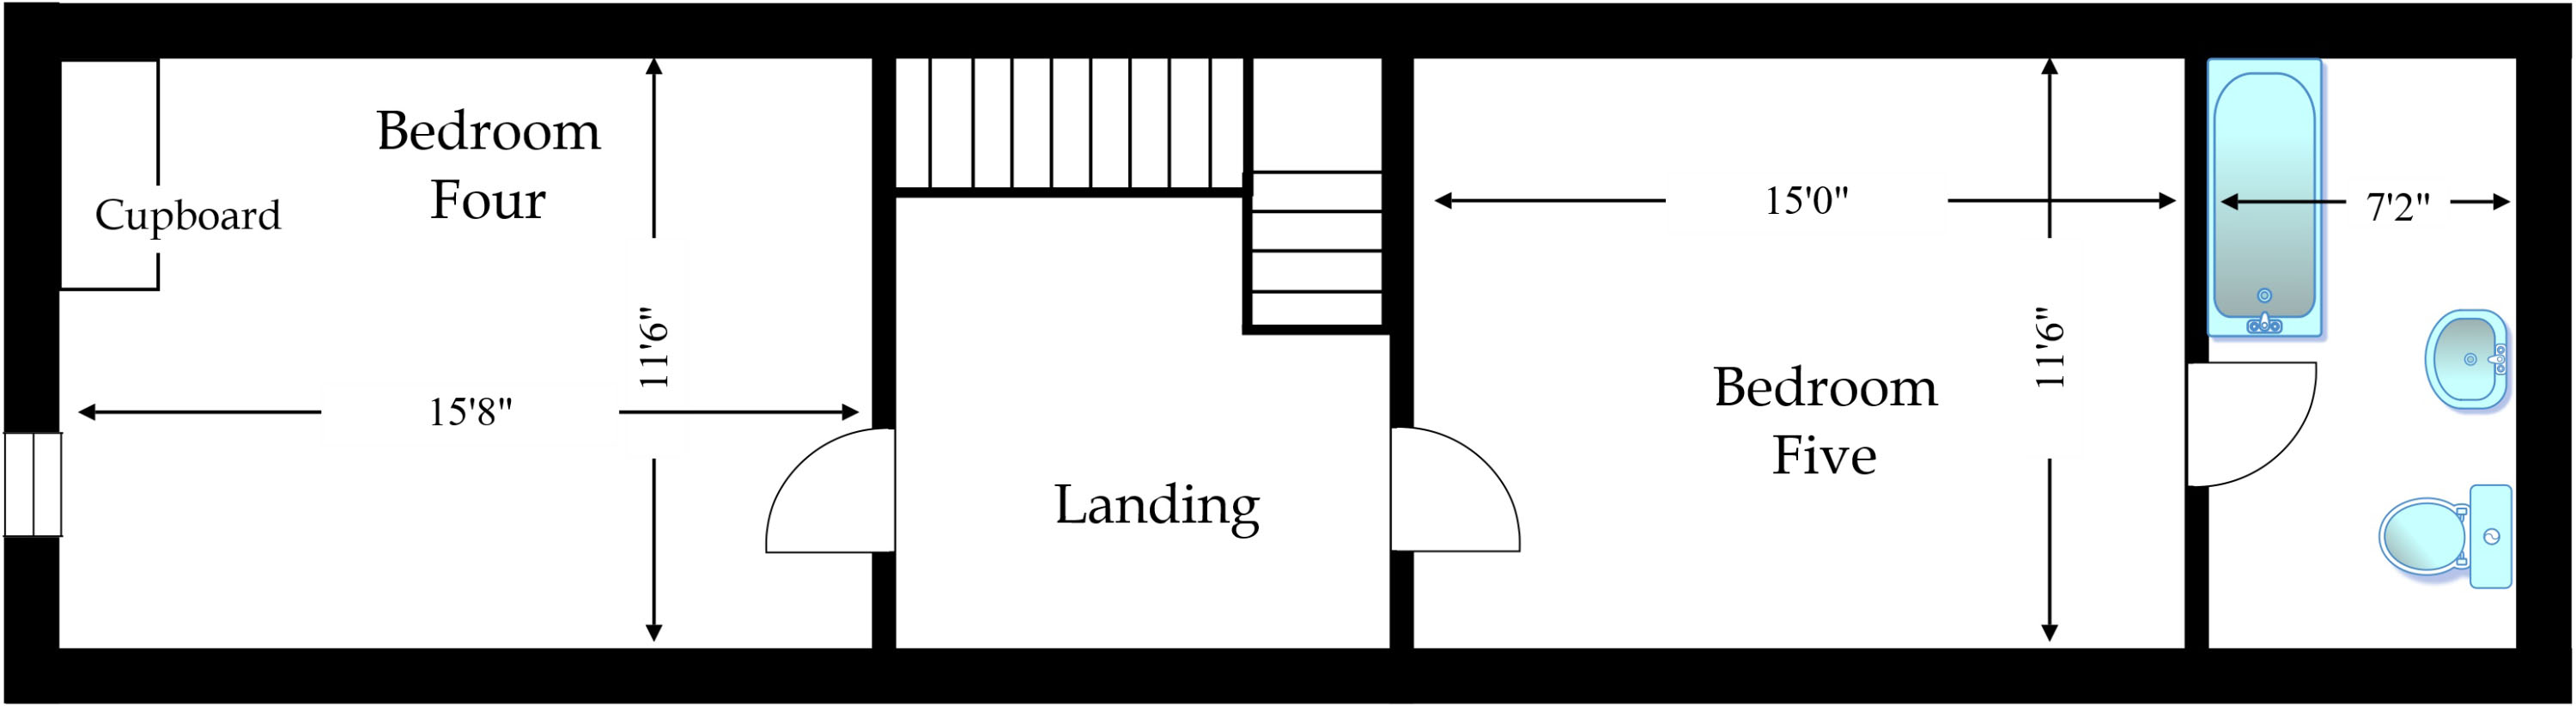 Baytree Attic Floor Layout Plan